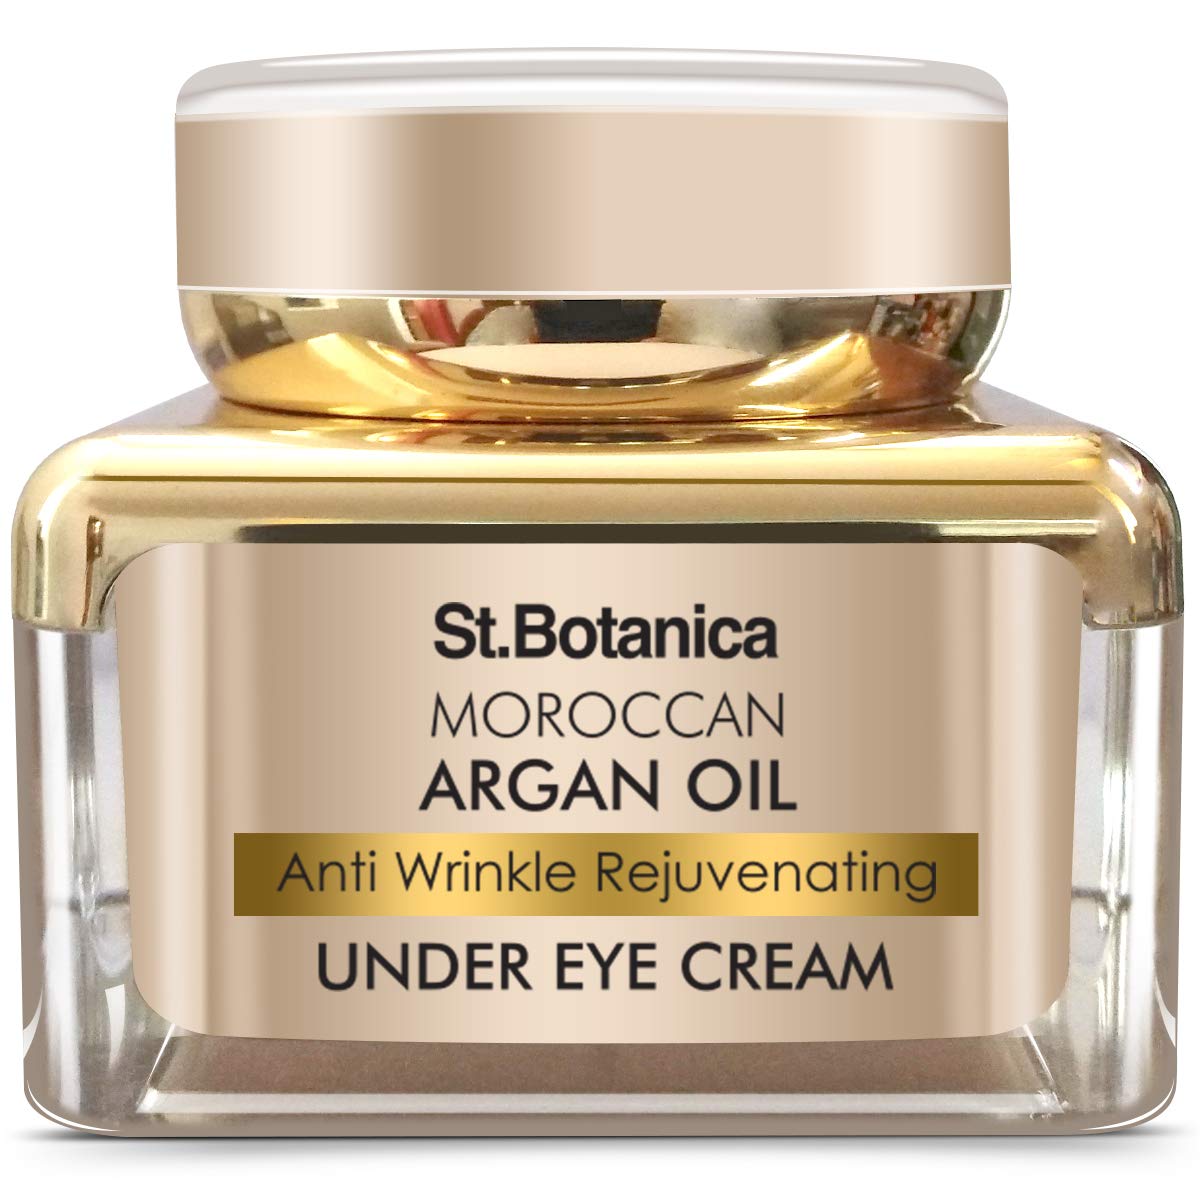 St.Botanica Moroccan Argan Oil Anti Wrinkle Rejuvenating Under Eye Cream - Fights Skin Aging, Fine Lines and Dark Circles, (30 g, Normal Skin)